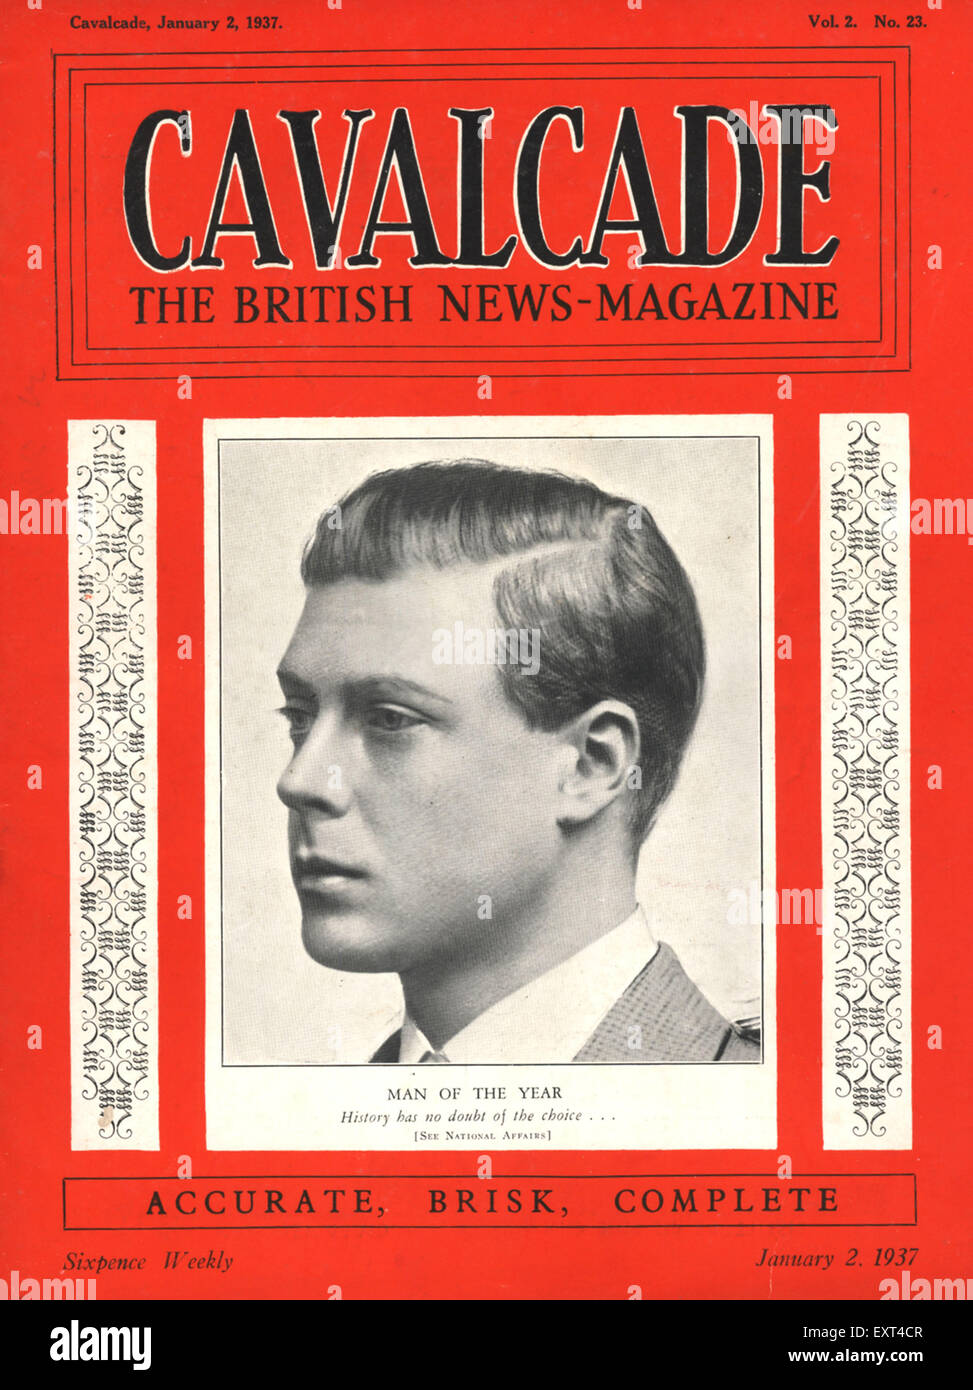 Image result for cavalcade magazine  1937 epilepsy